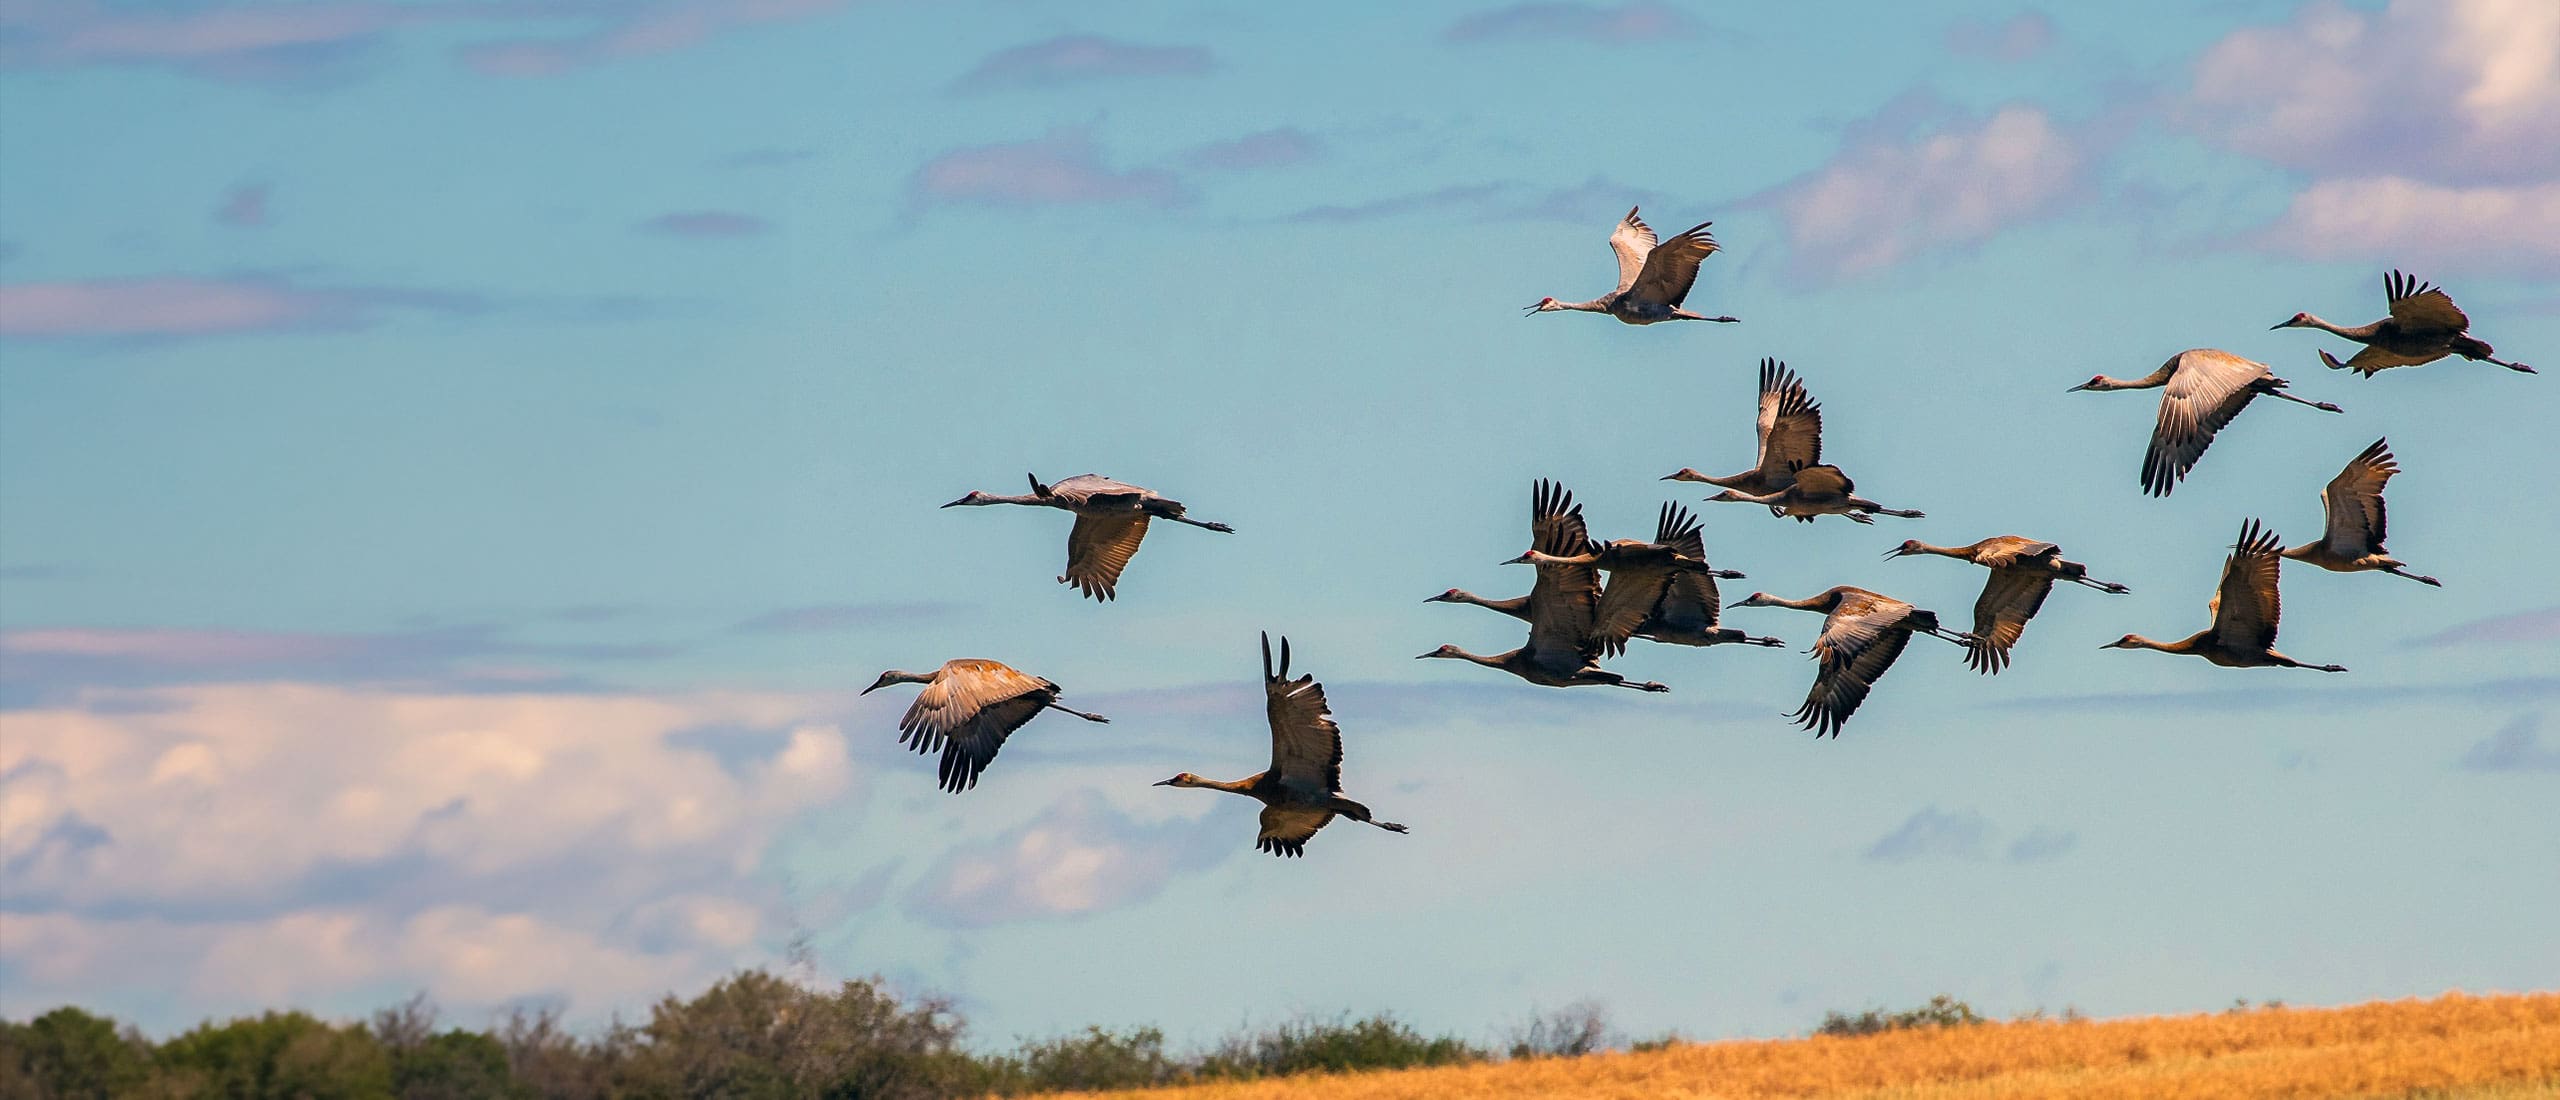 Sandhill cranes in flight